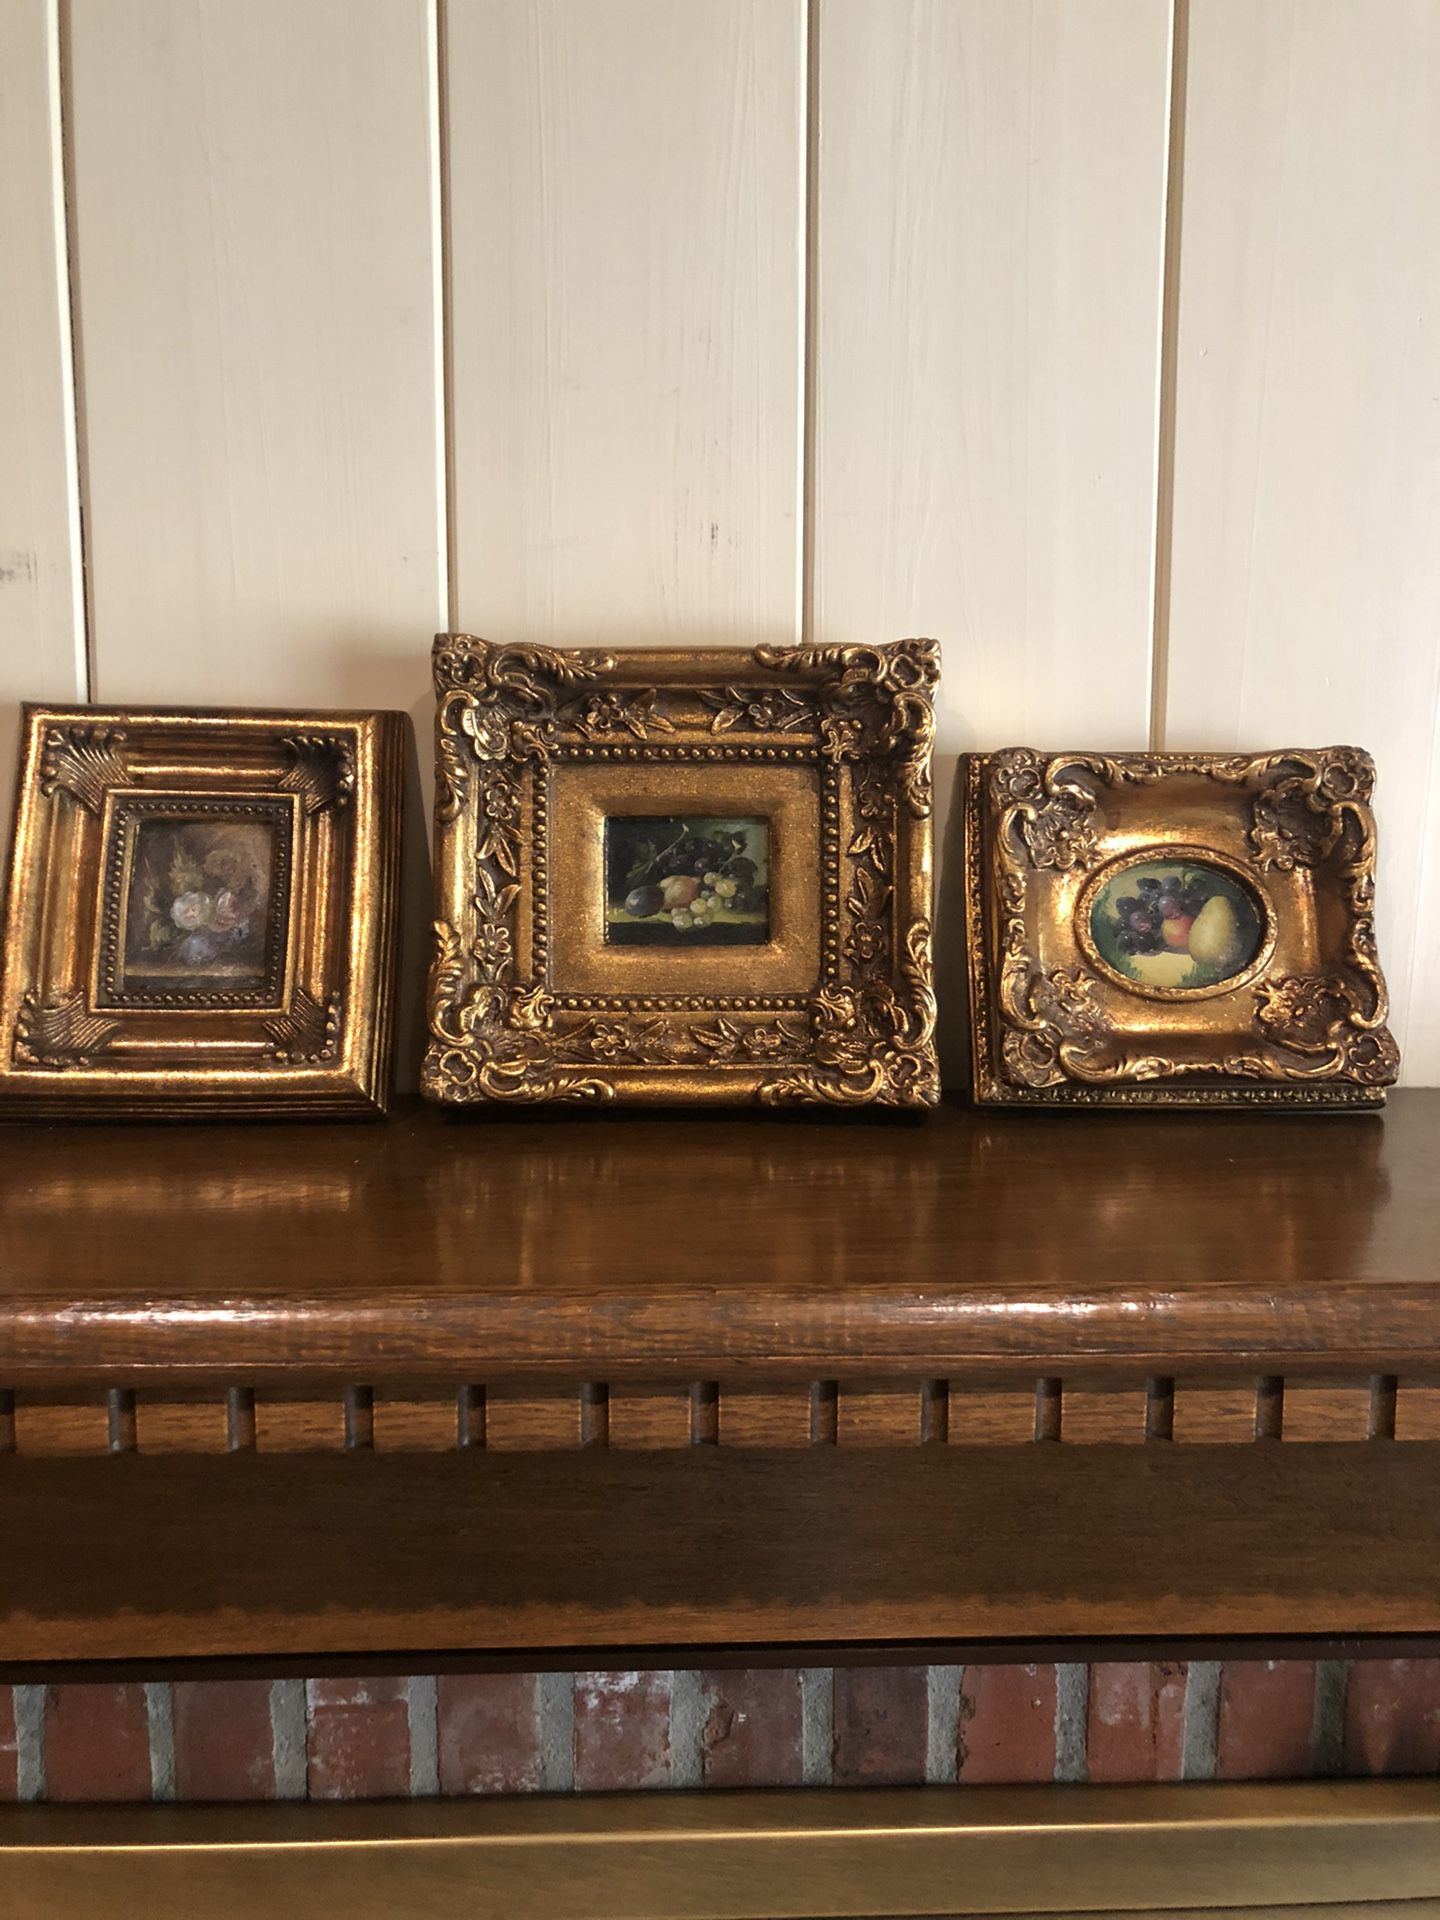 Three small oil paintings